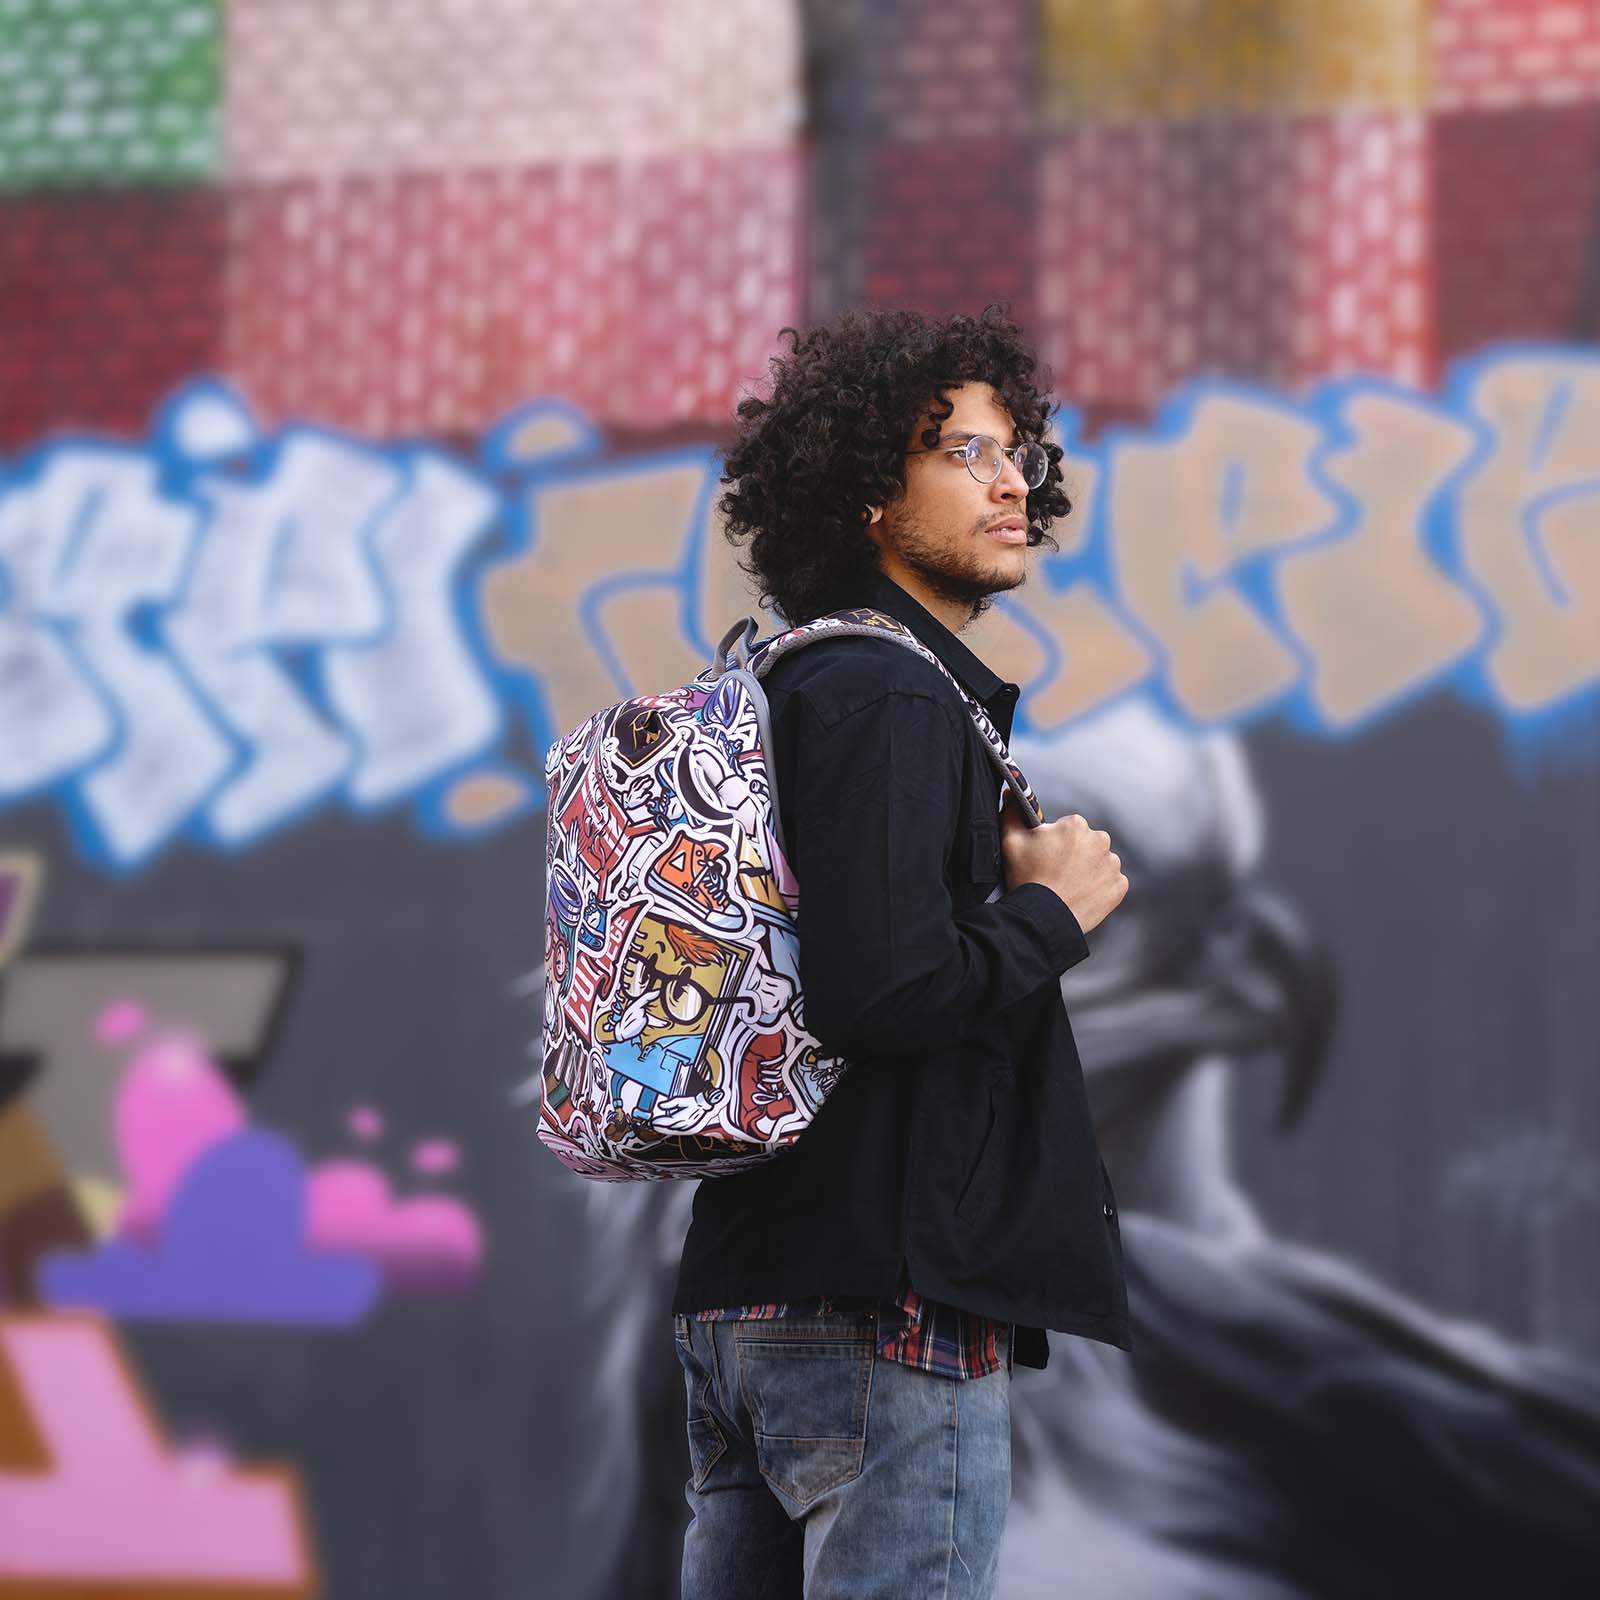 Рюкзак для ноутбука унисекс XD Design Bobby Soft Art 15,6" граффити